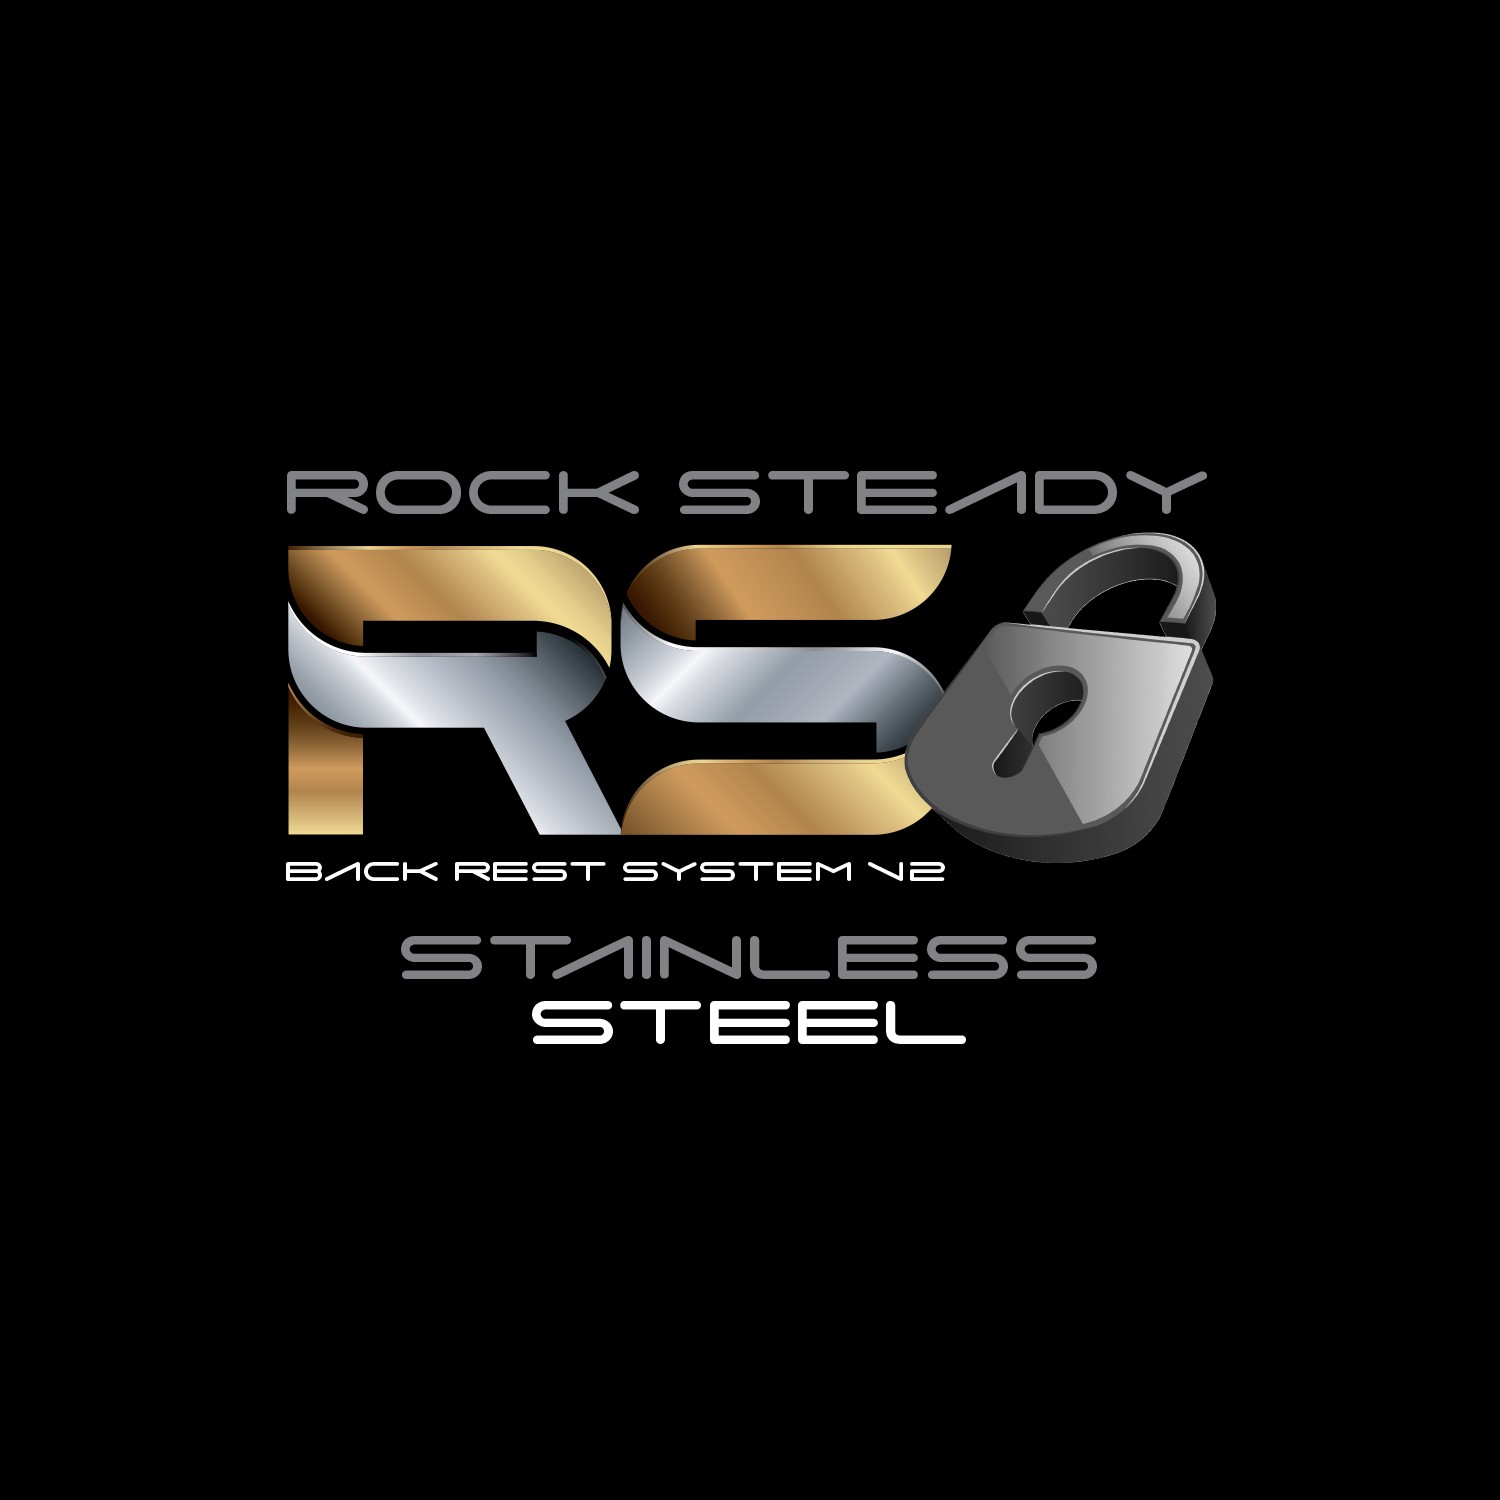 ROCK STEADY BACK REST SYSTEM V2 STAINLESS STEEL